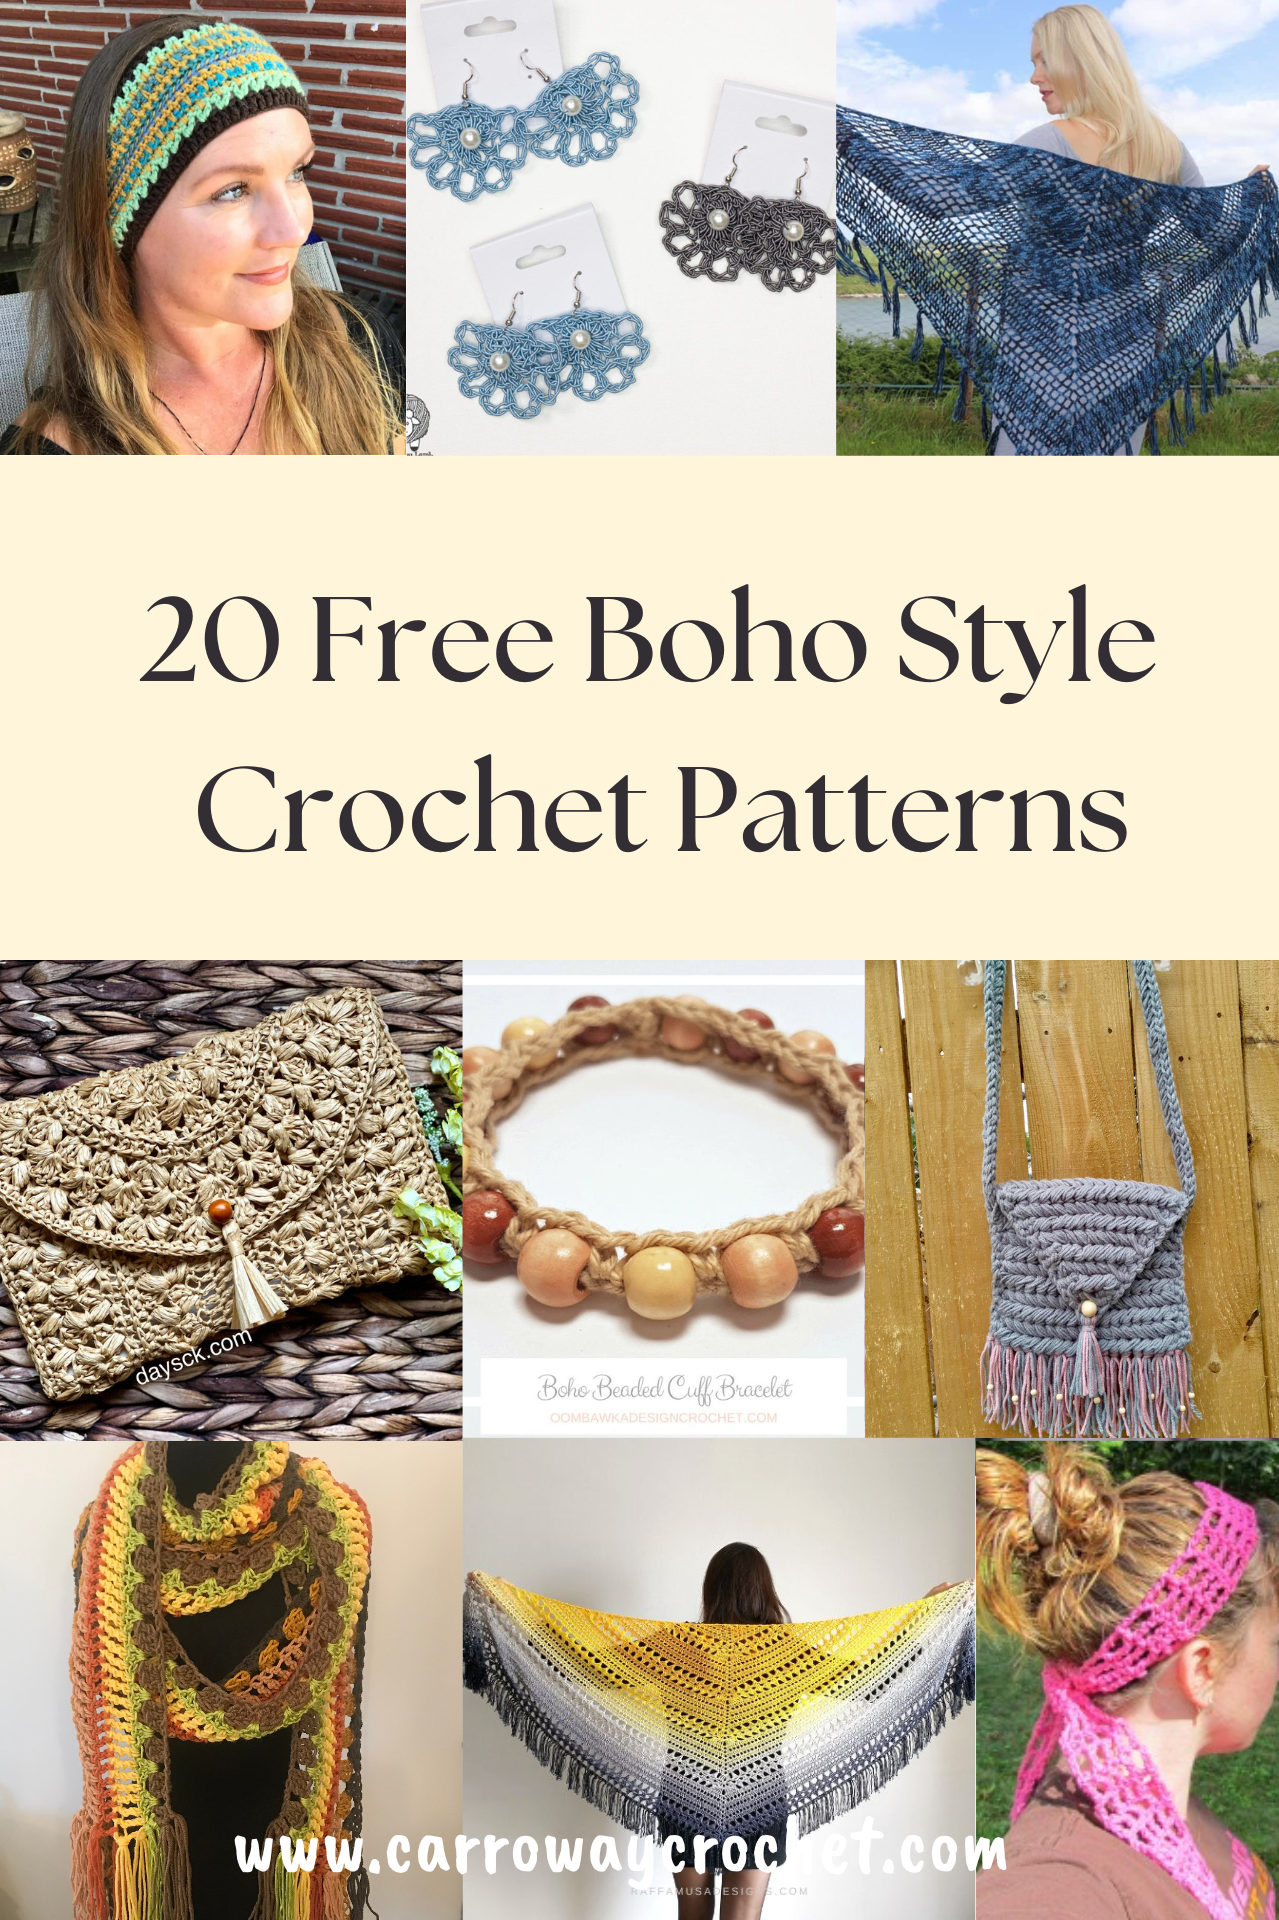 20 Free Boho Style Crochet Patterns Roundup - Carroway Crochet